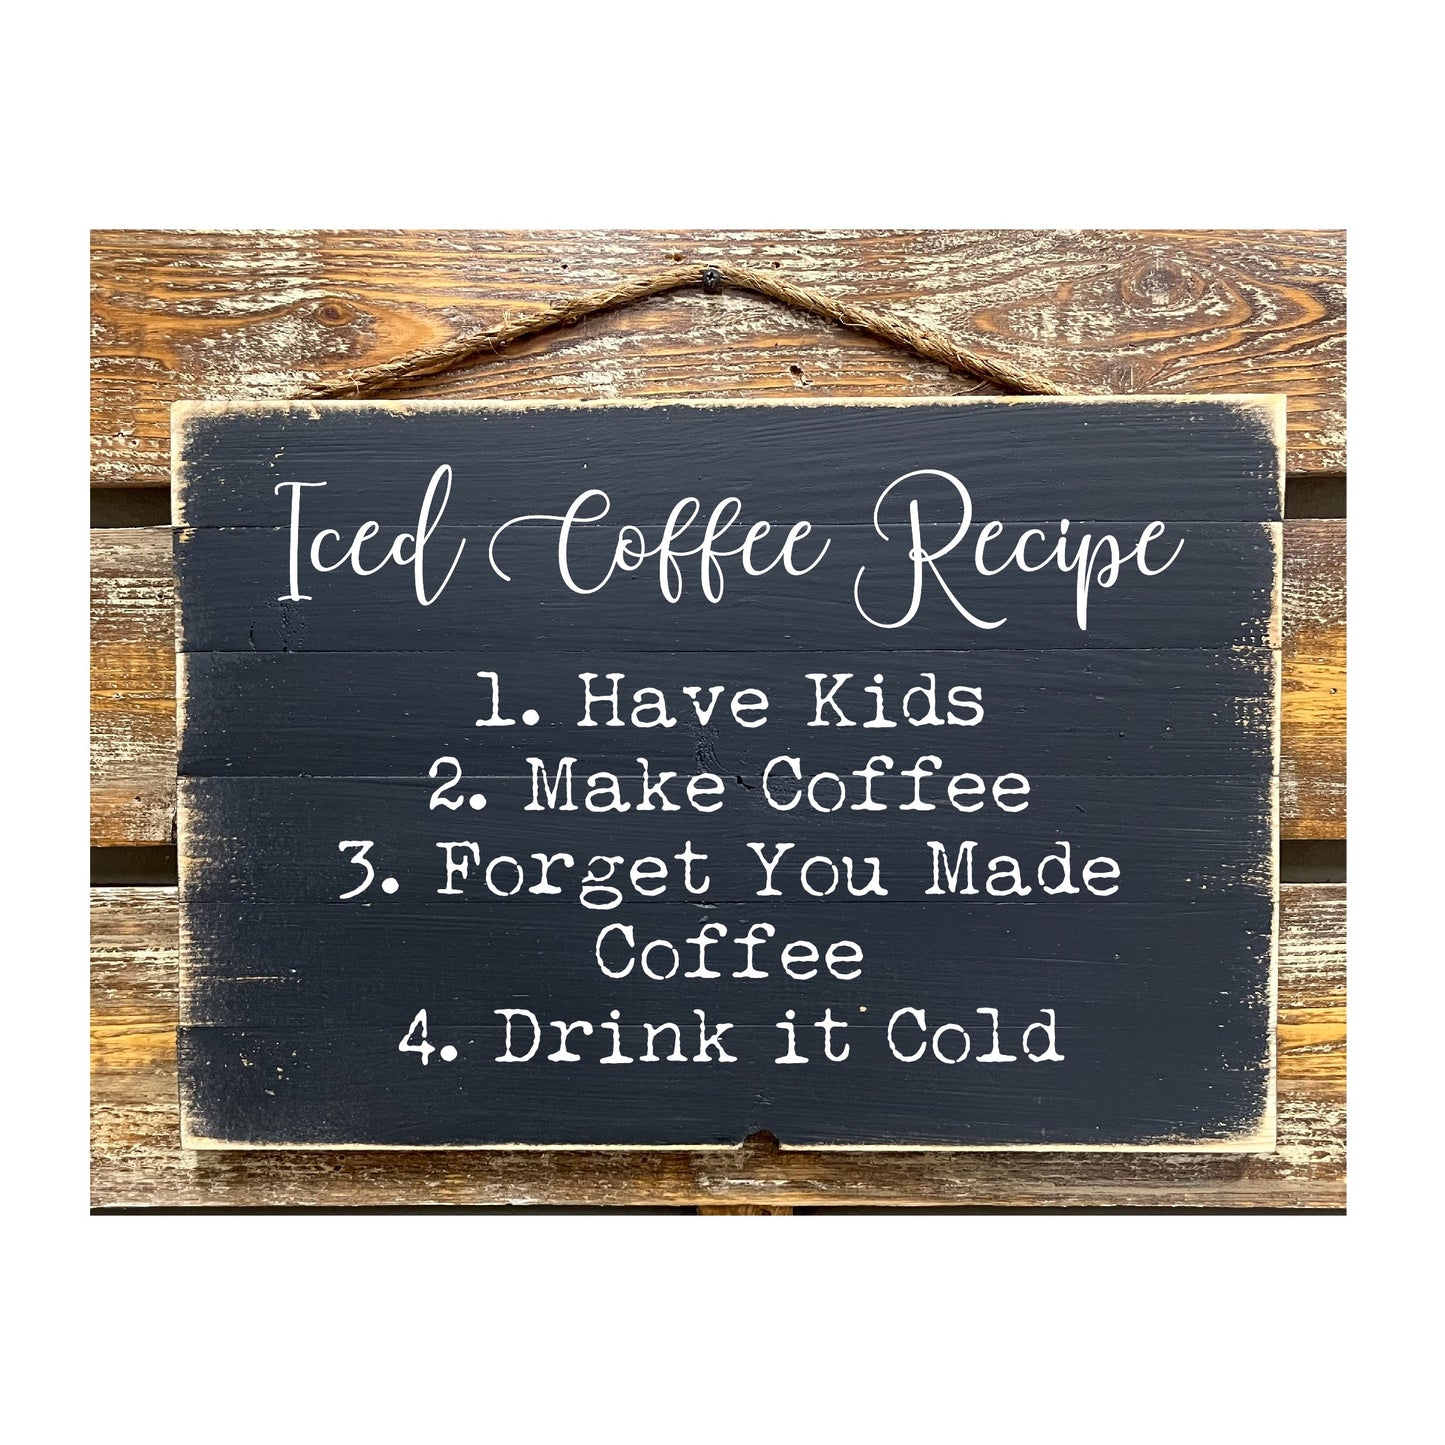 Iced Coffee Recipe